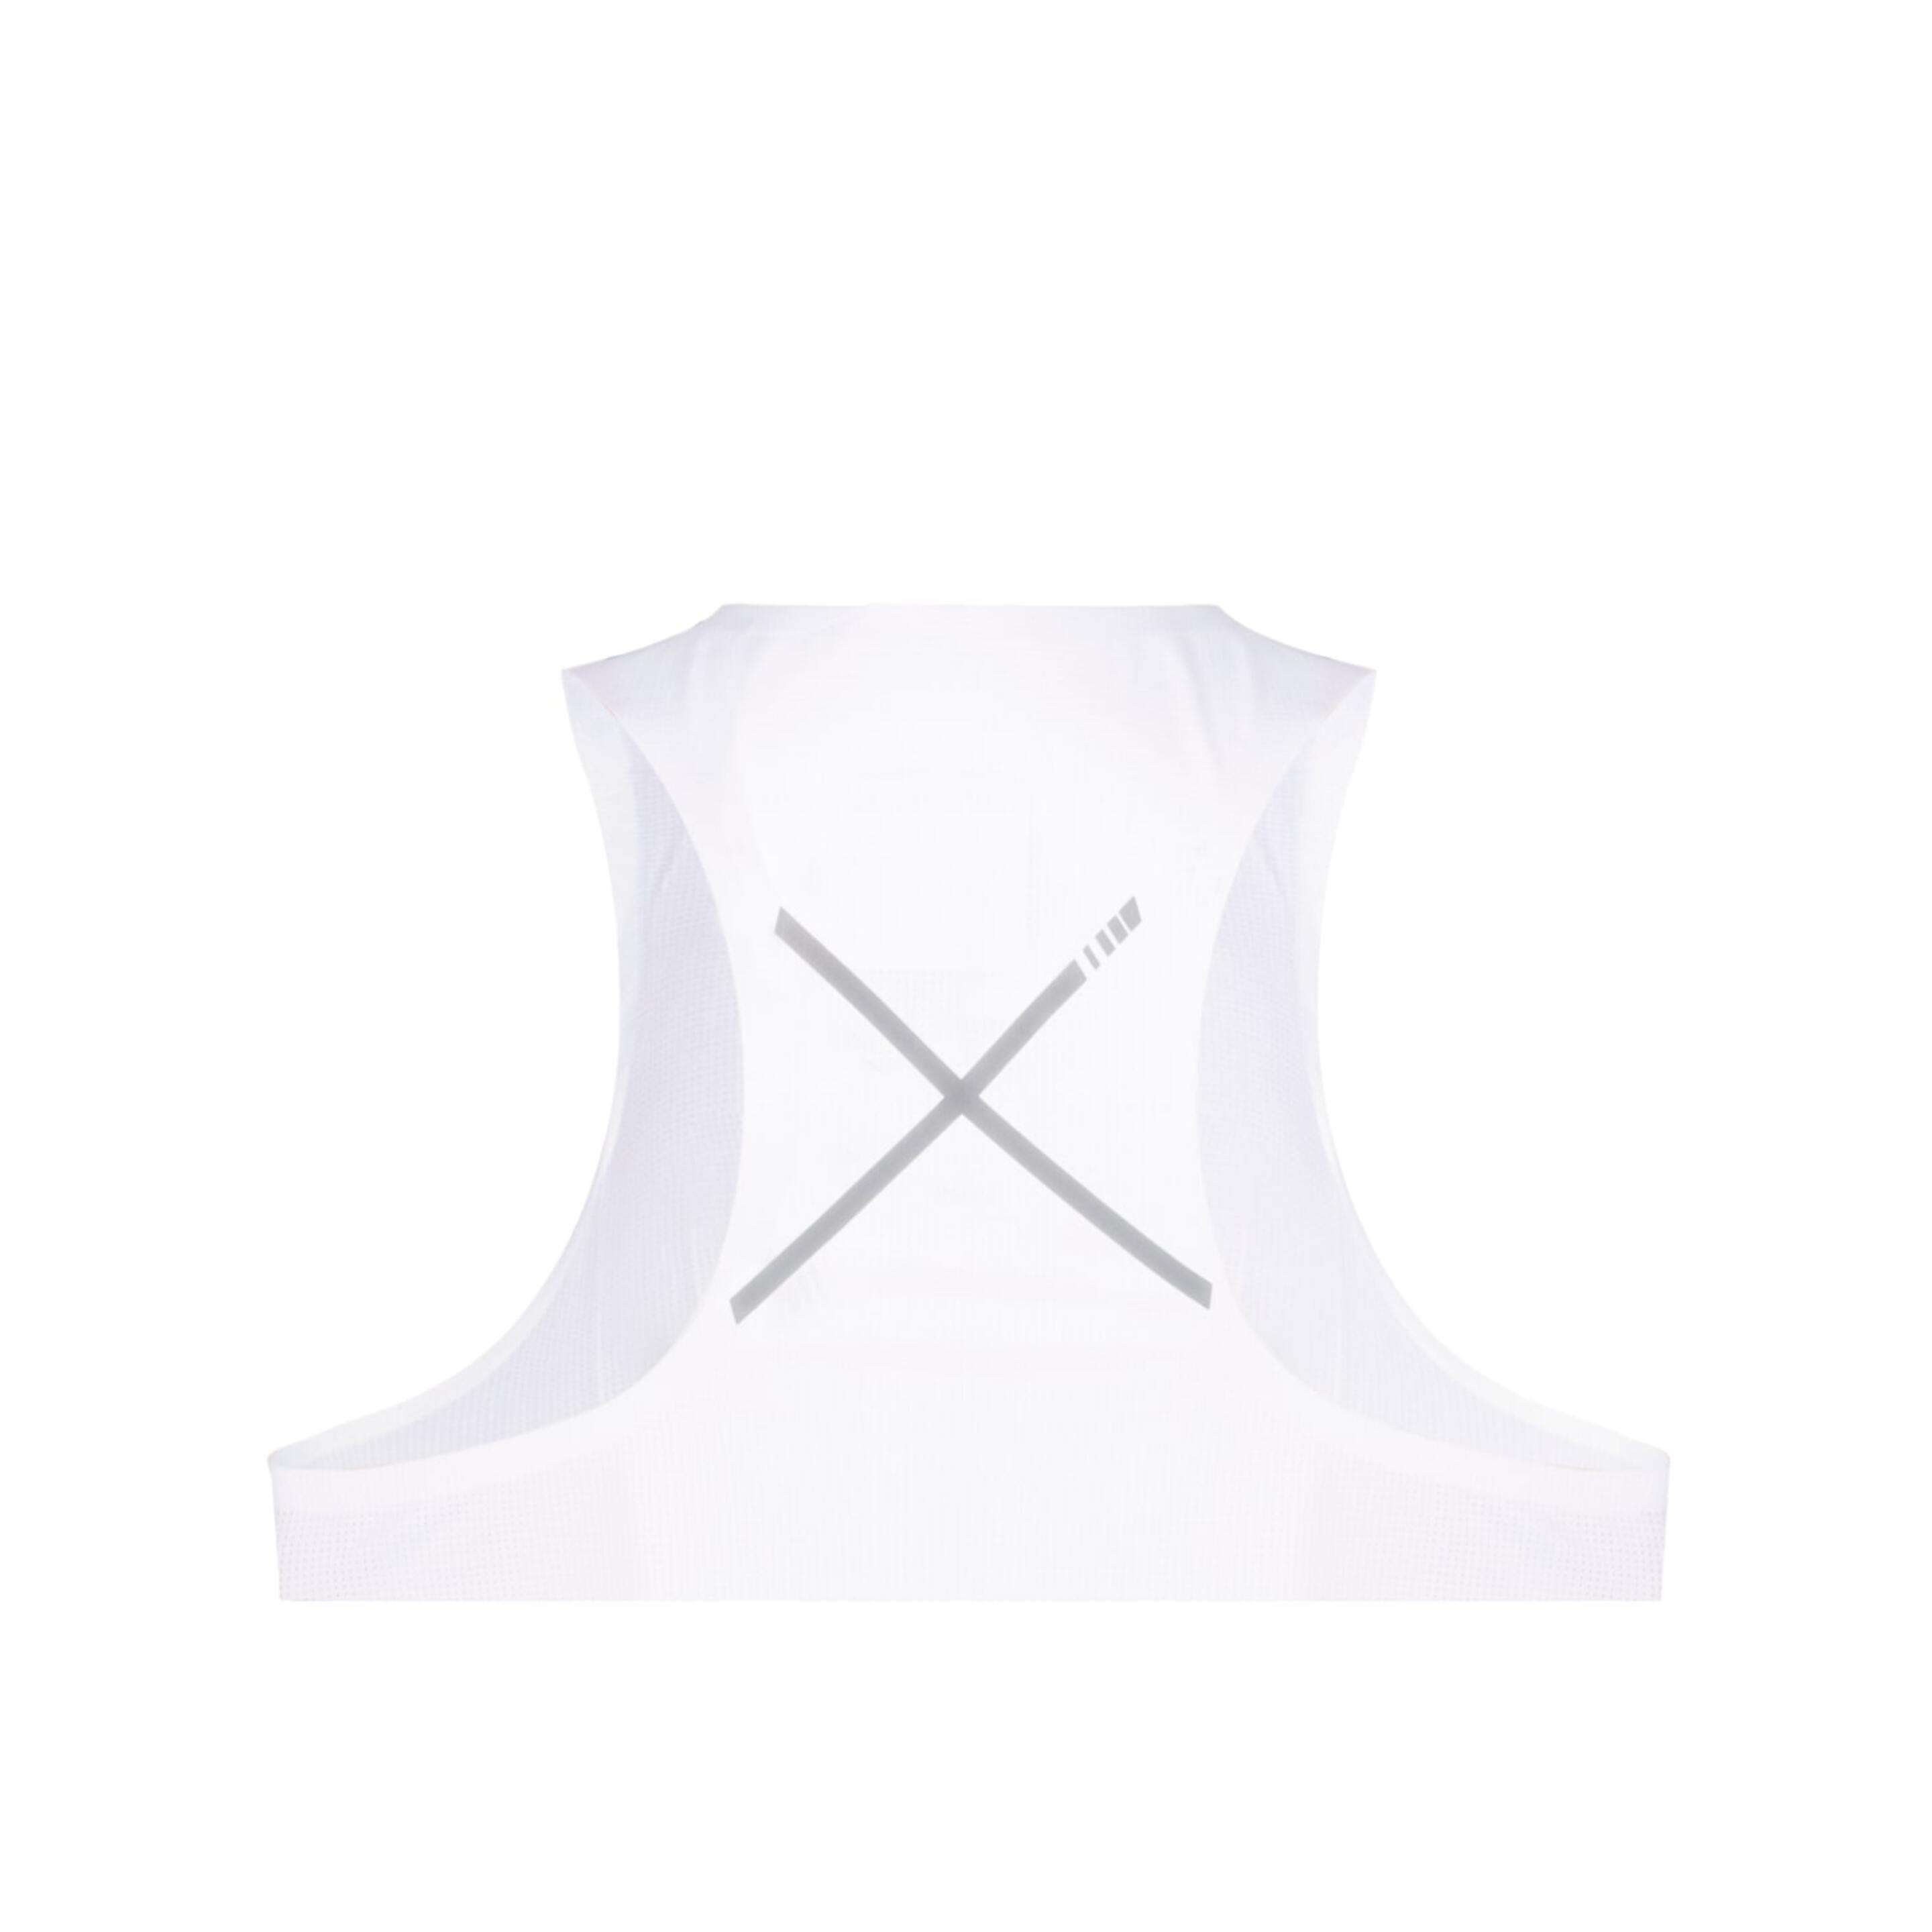 Camiseta Sin Mangas Bodycross Aina - Blanco - Aina-white/black-s  MKP